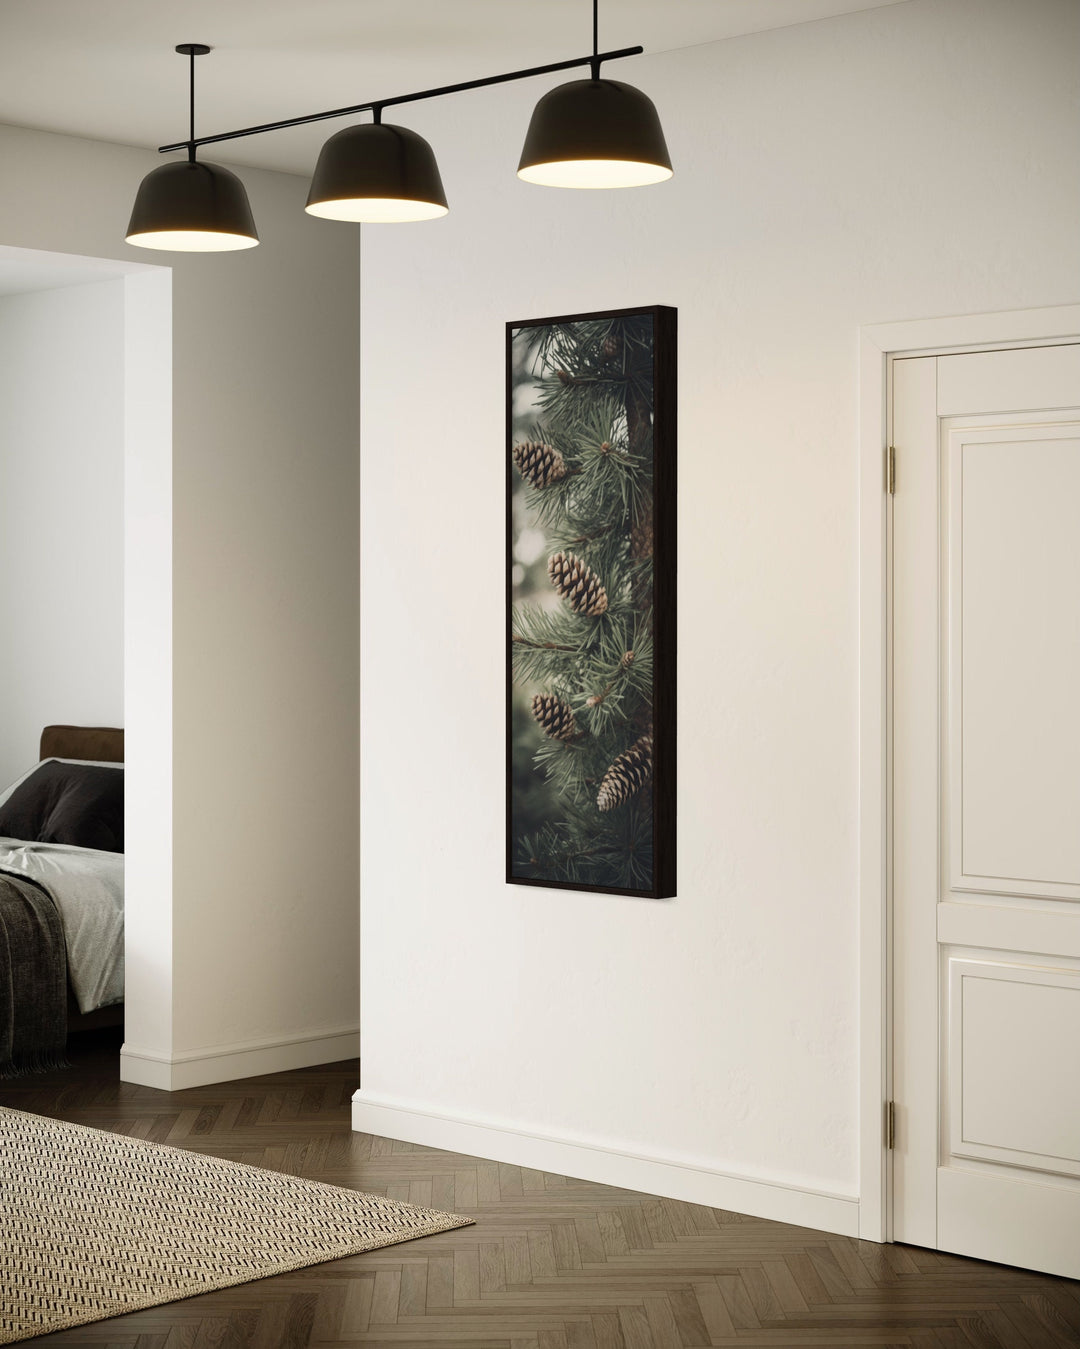 Tall Narrow Pine Tree Vertical Framed Canvas Wall Art in living room